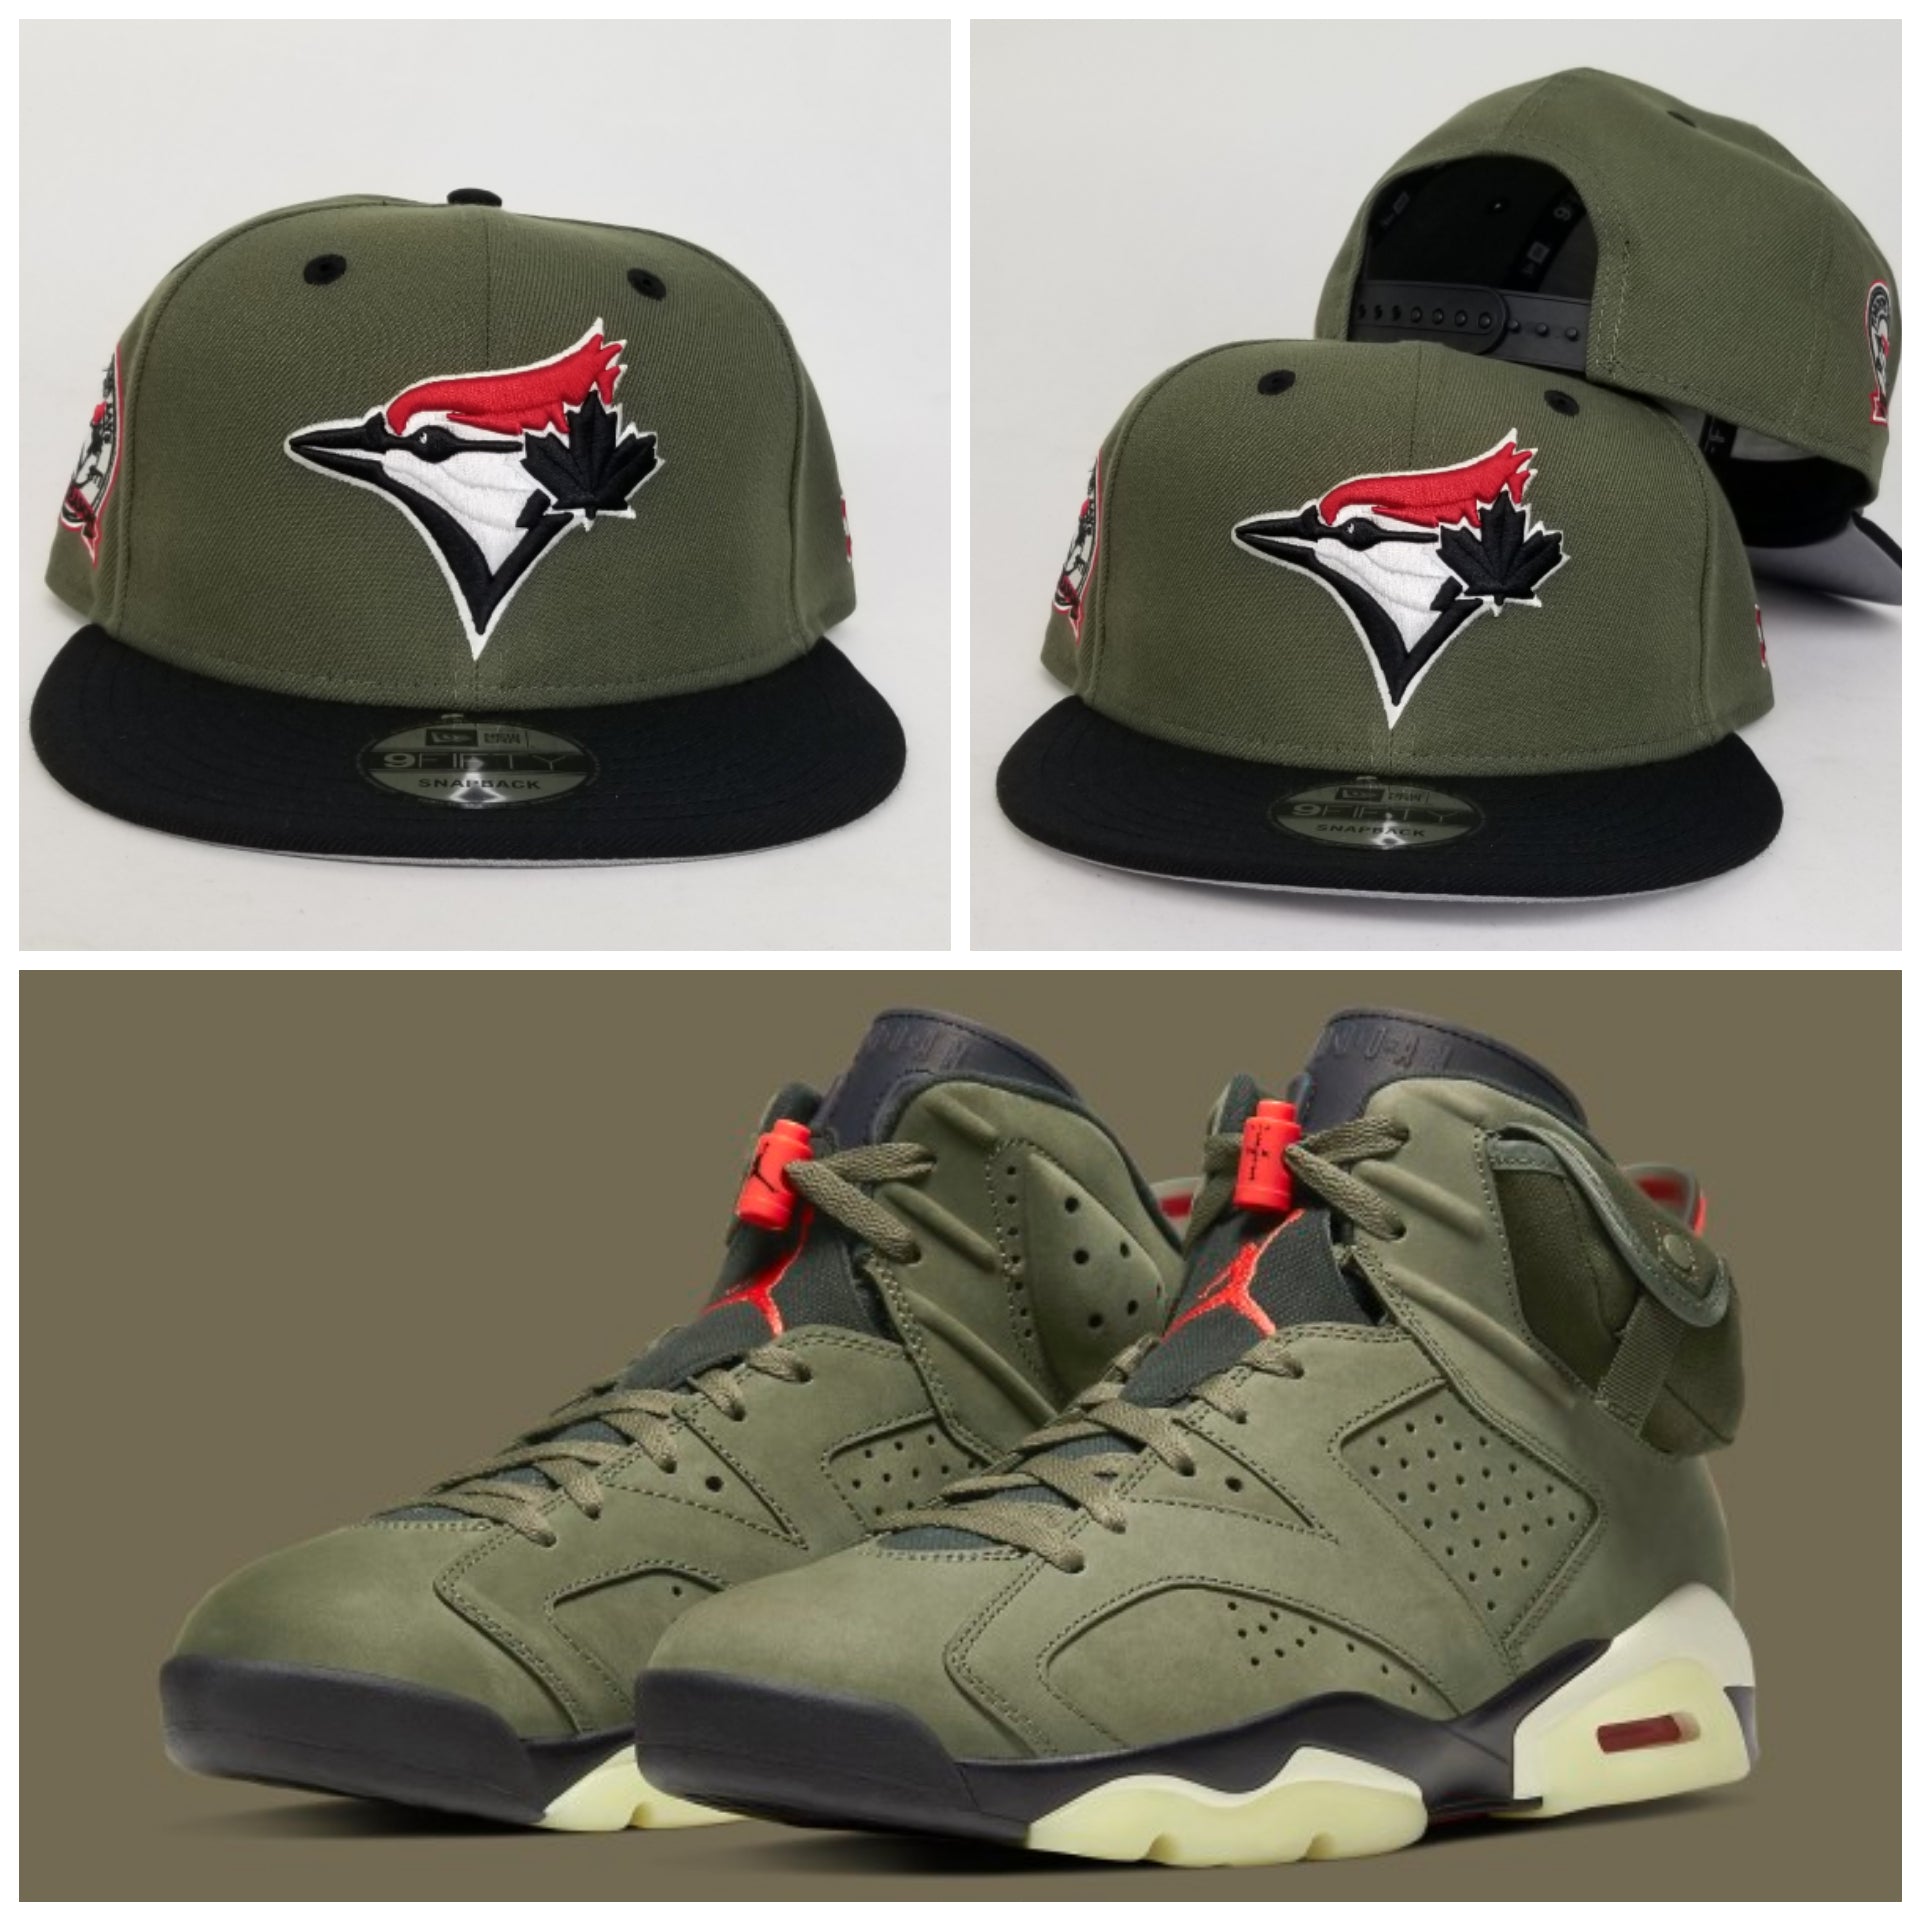 Matching New Era Toronto Blue Jays Snapback Hat for Jordan 6 Travis Scott